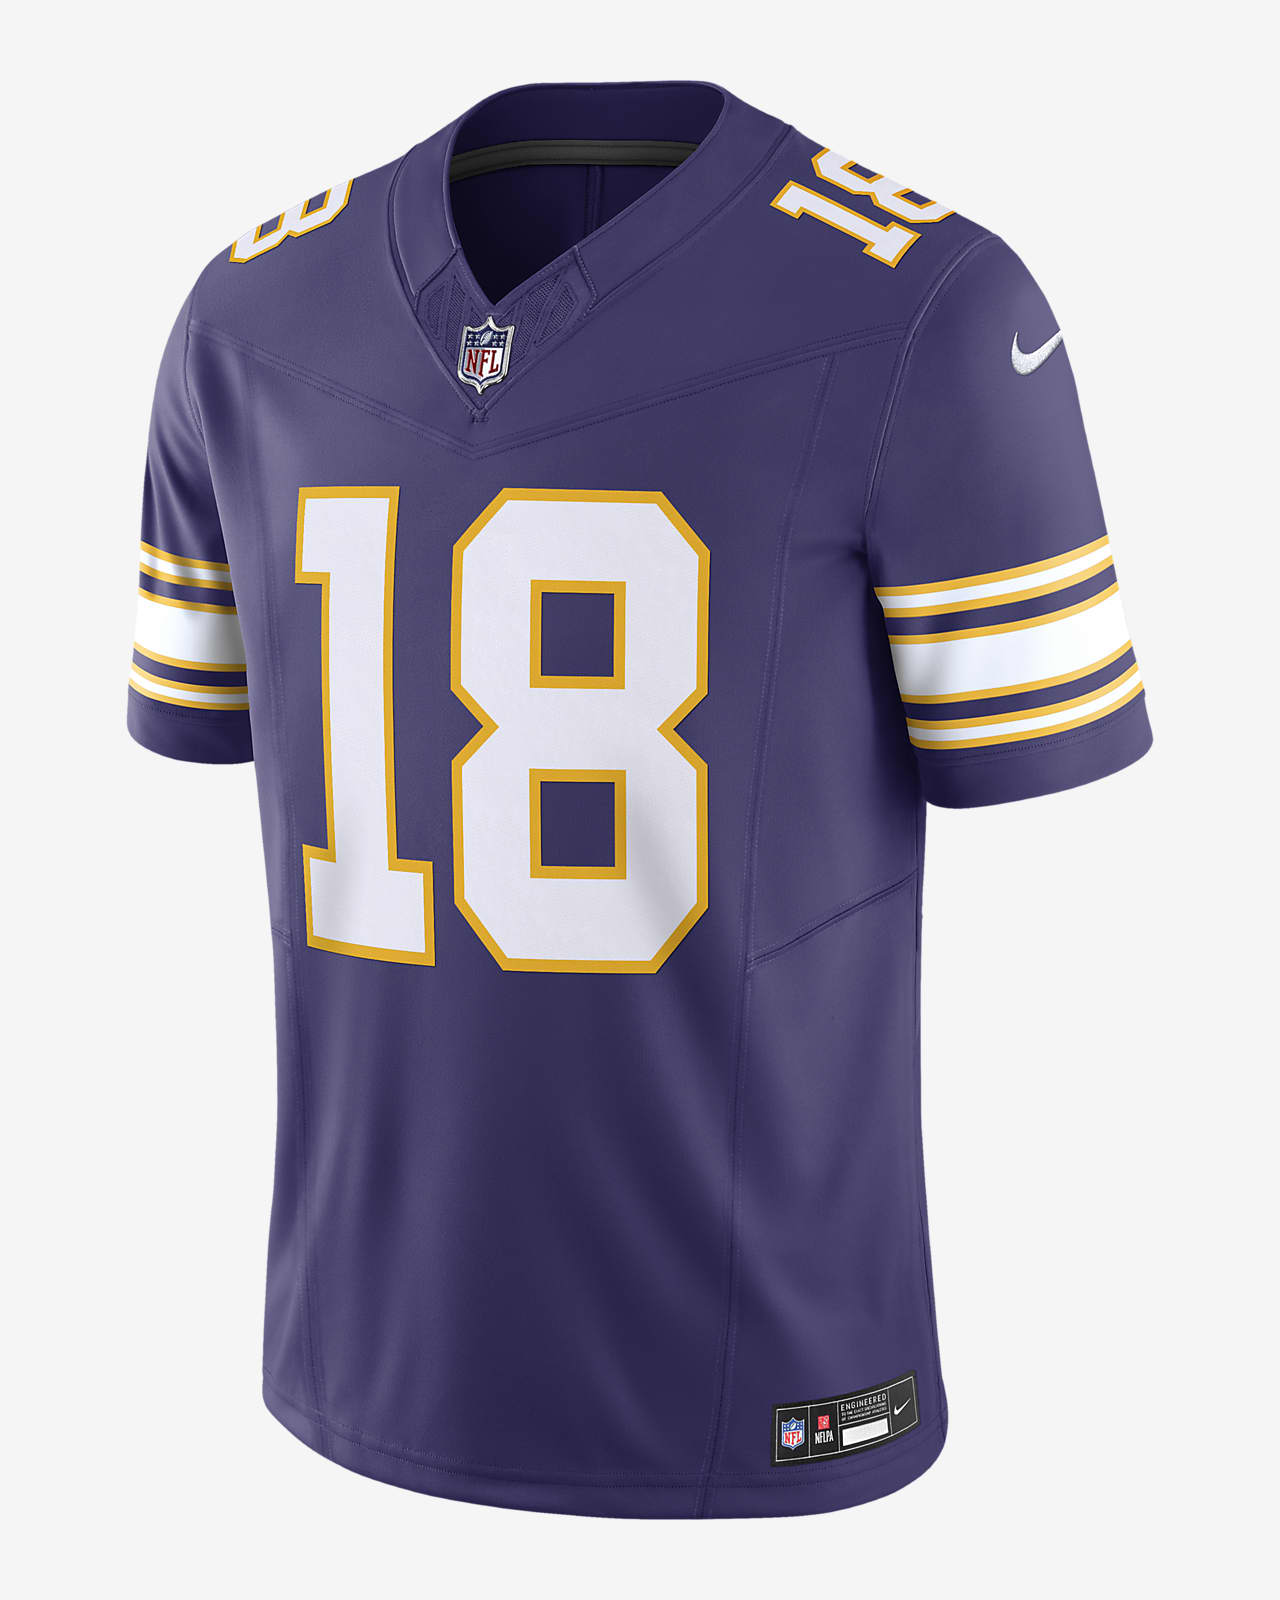 Jersey de fútbol americano Nike Dri-FIT de la NFL Limited para hombre Justin Jefferson Minnesota Vikings